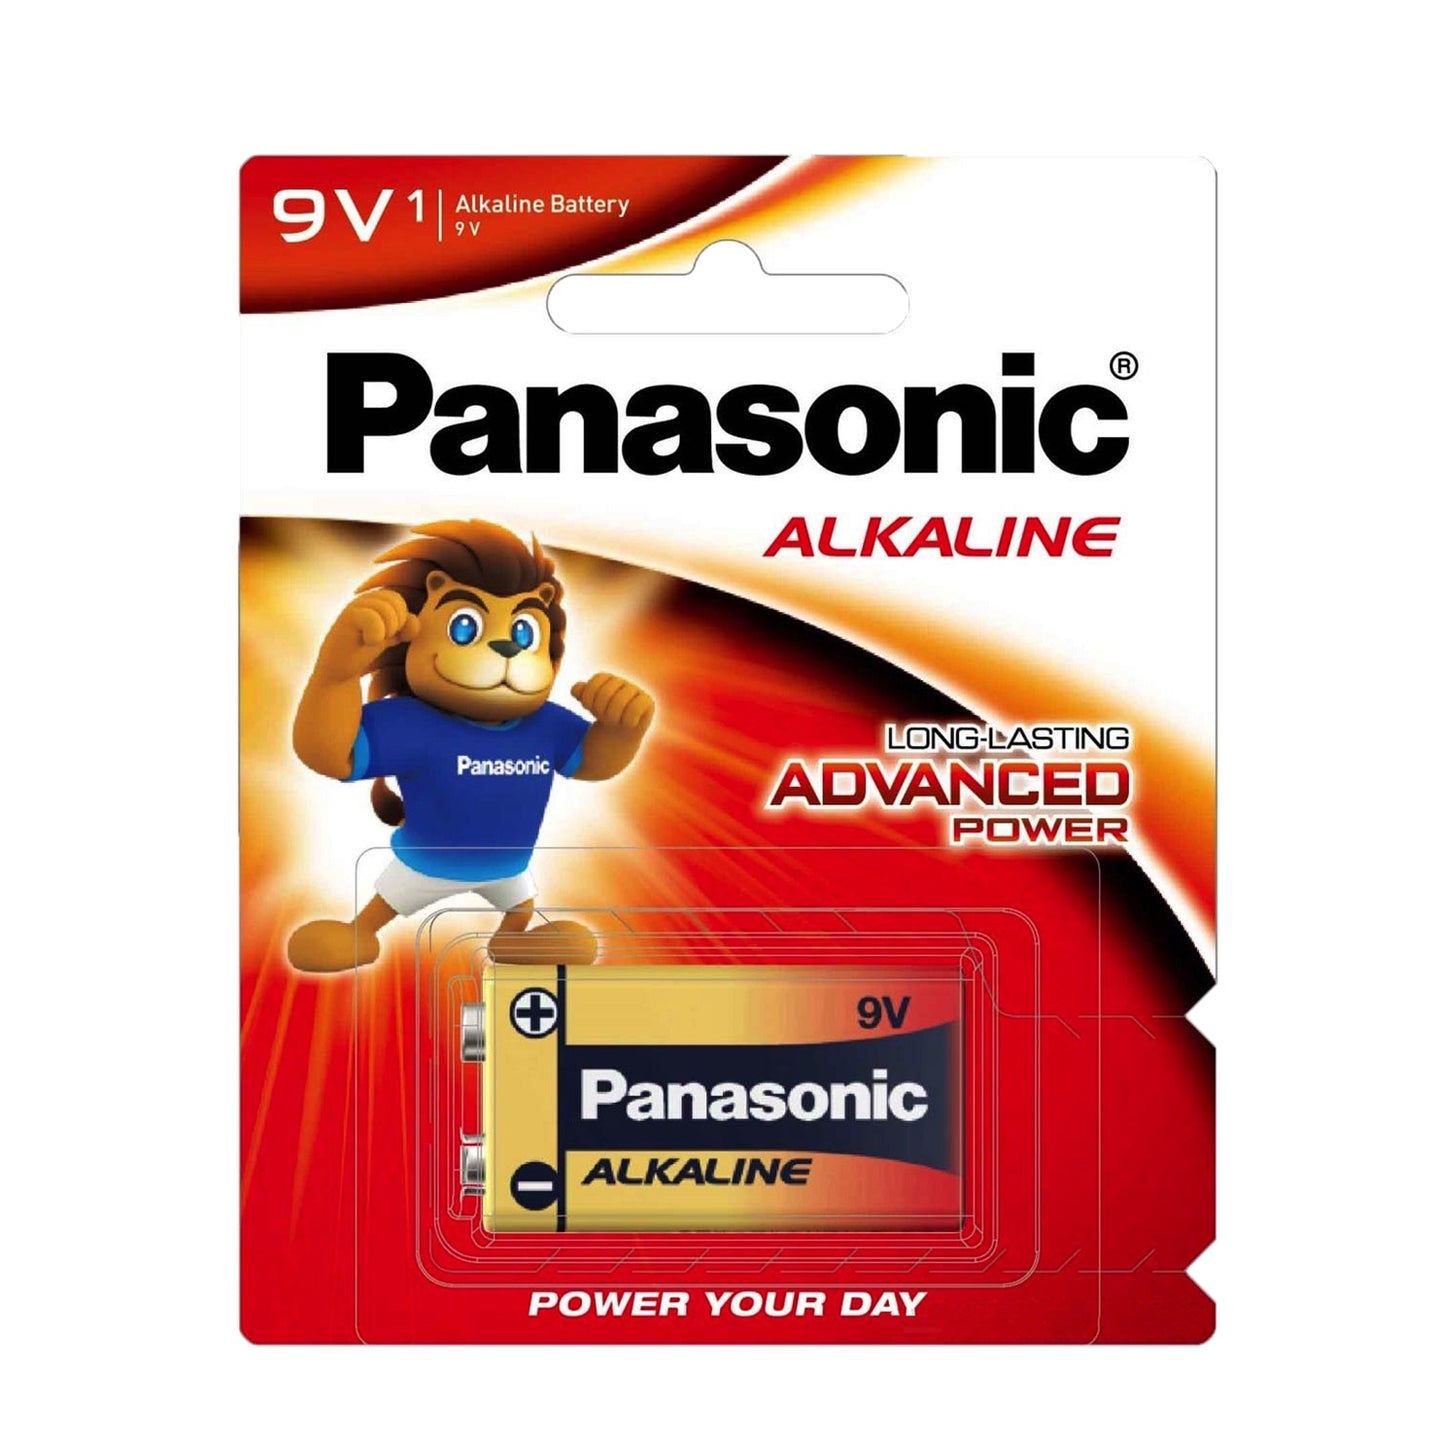 Panasonic 6LR61T/1B Long Lasting Advance Power Alkaline 9V 6F22 Battery